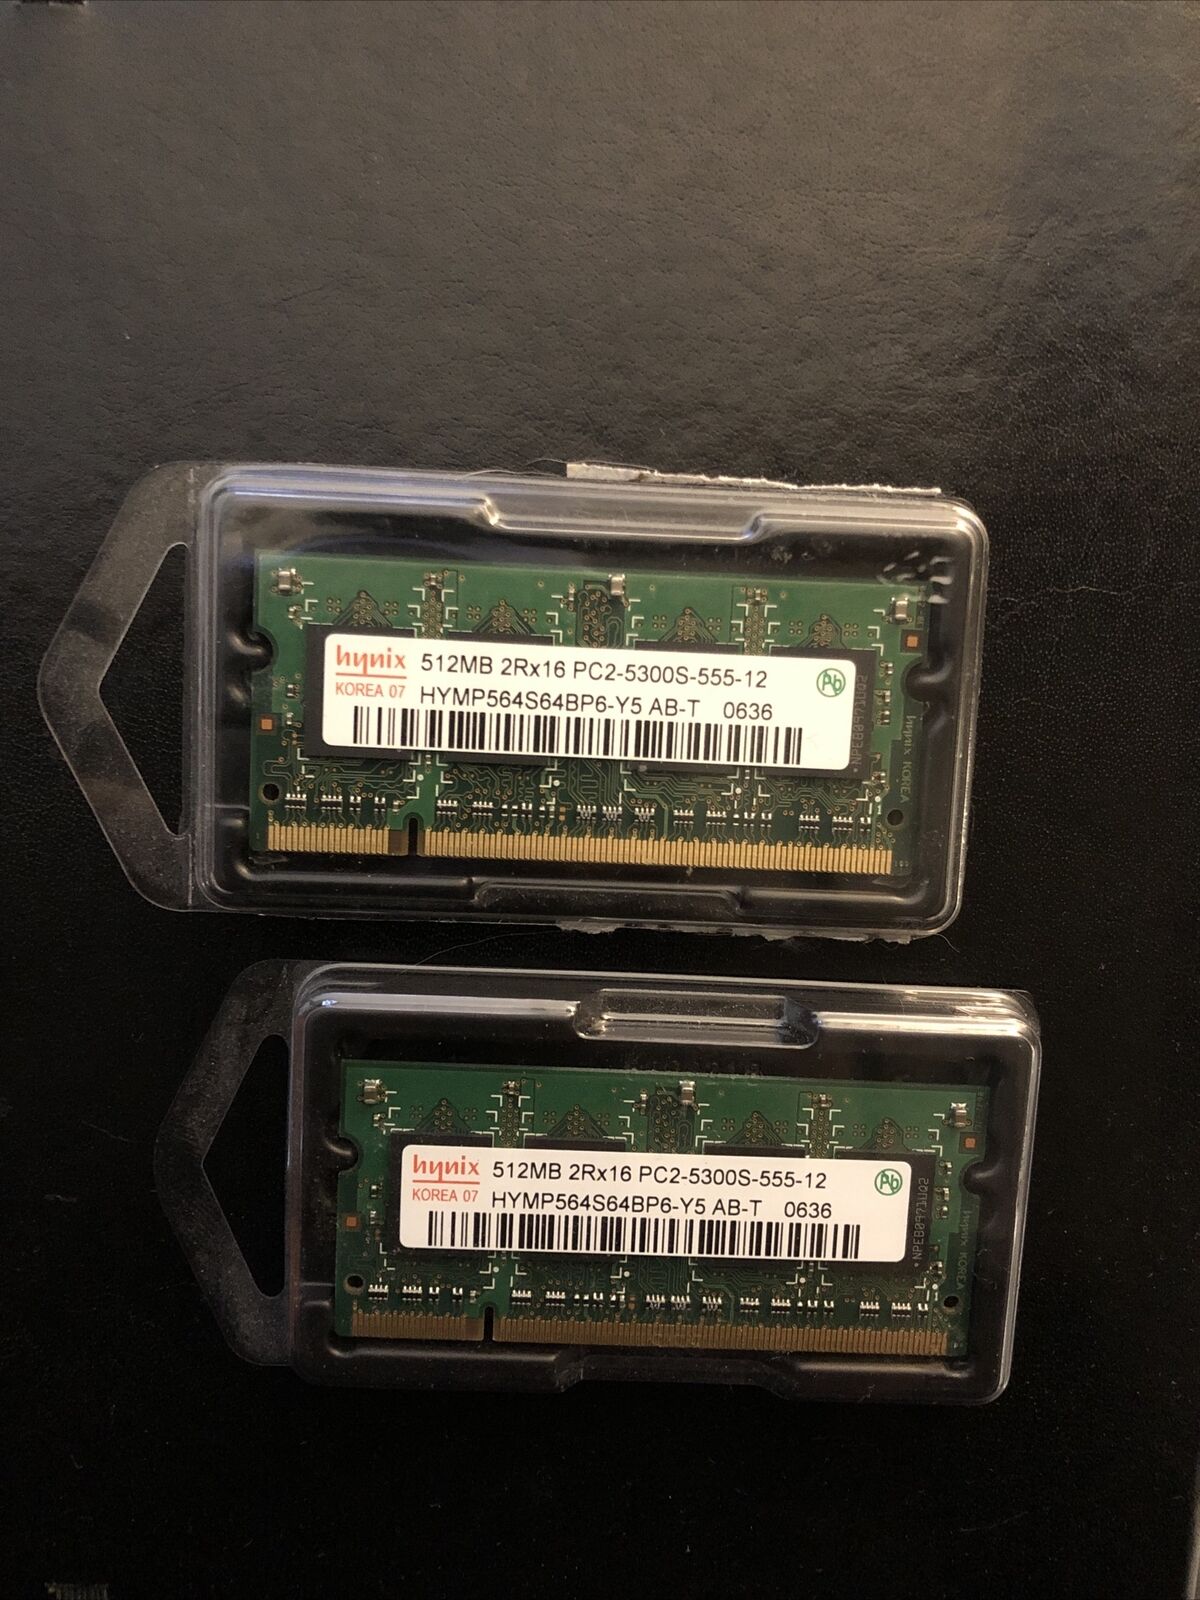 Hynix 512 MB SO-DIMM DDR2 SDRAM Memory (HYMP564S64BP6Y5)